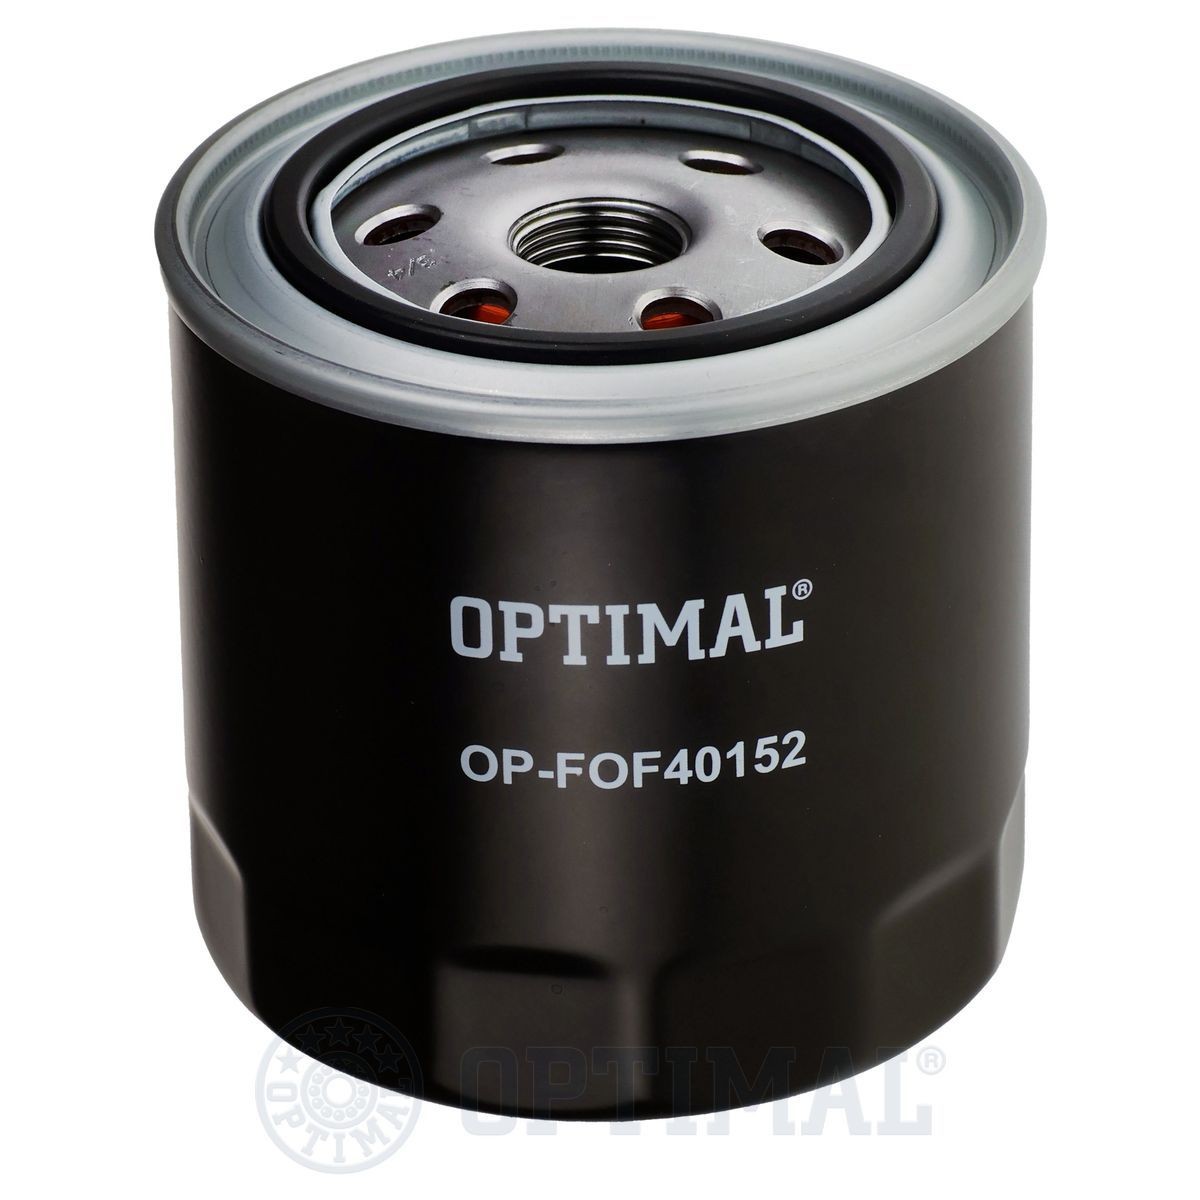 OPTIMAL OP-FOF40152 Oil filter 05037 836AB